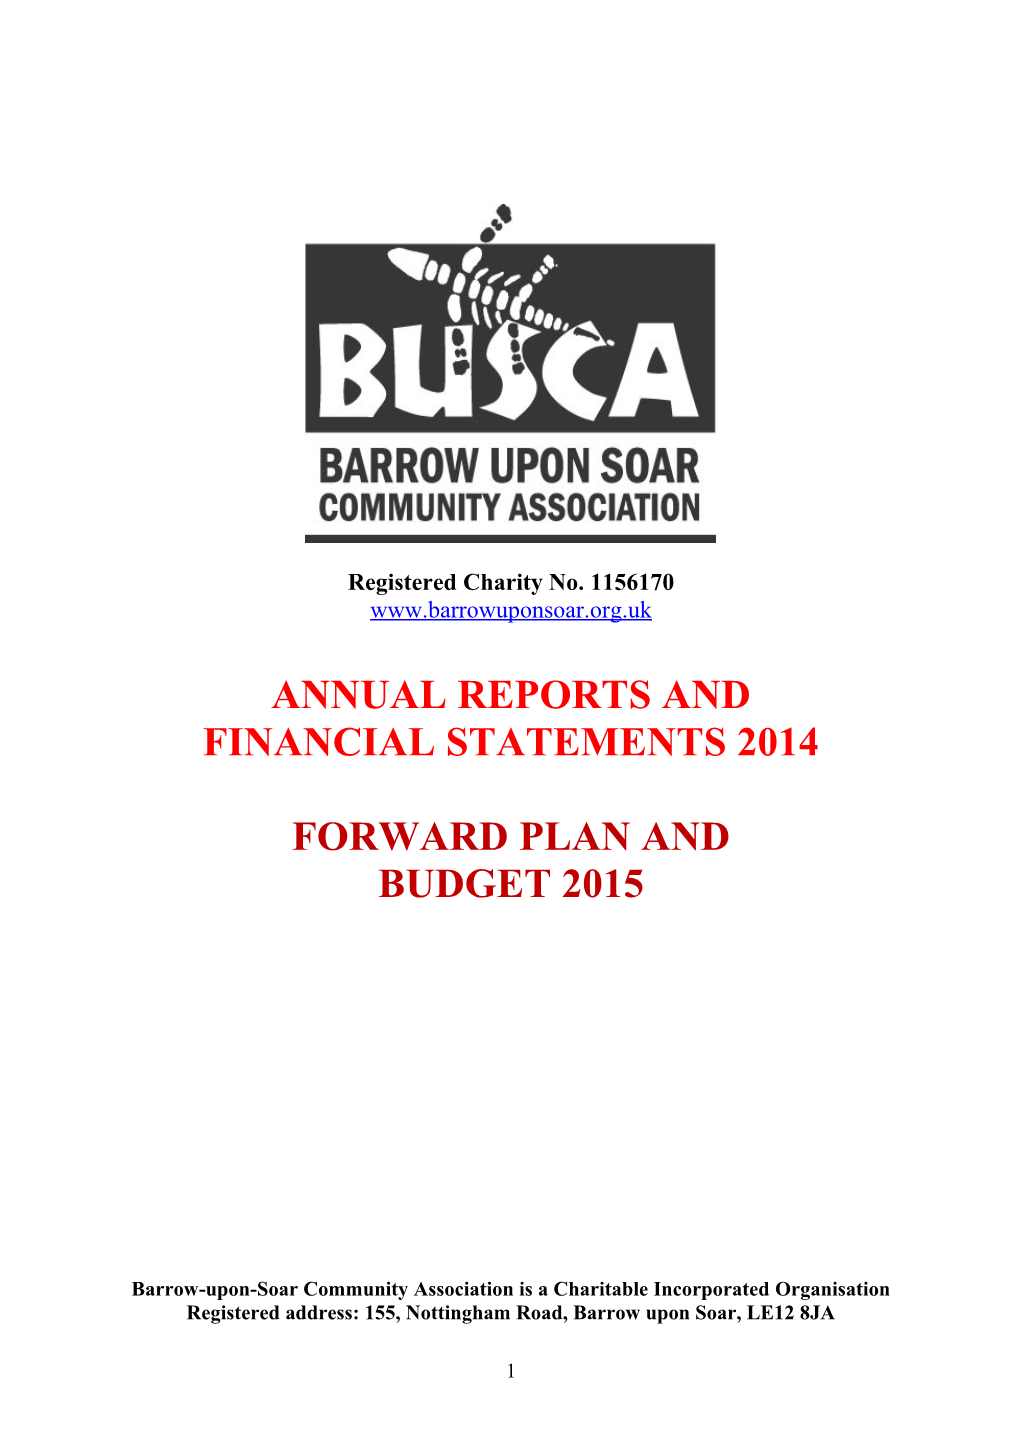 Barrow-Upon-Soar Community Association Annual Reports 2005